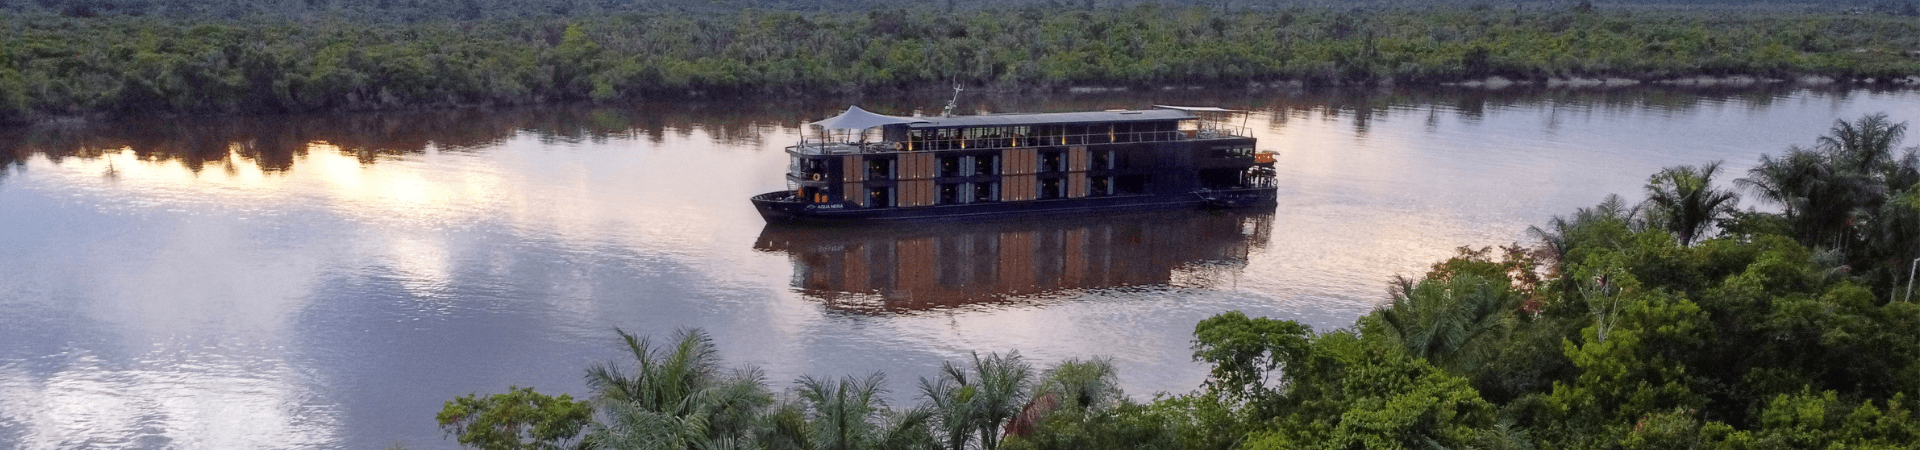 Aqua Nera - Amazon River Cruise